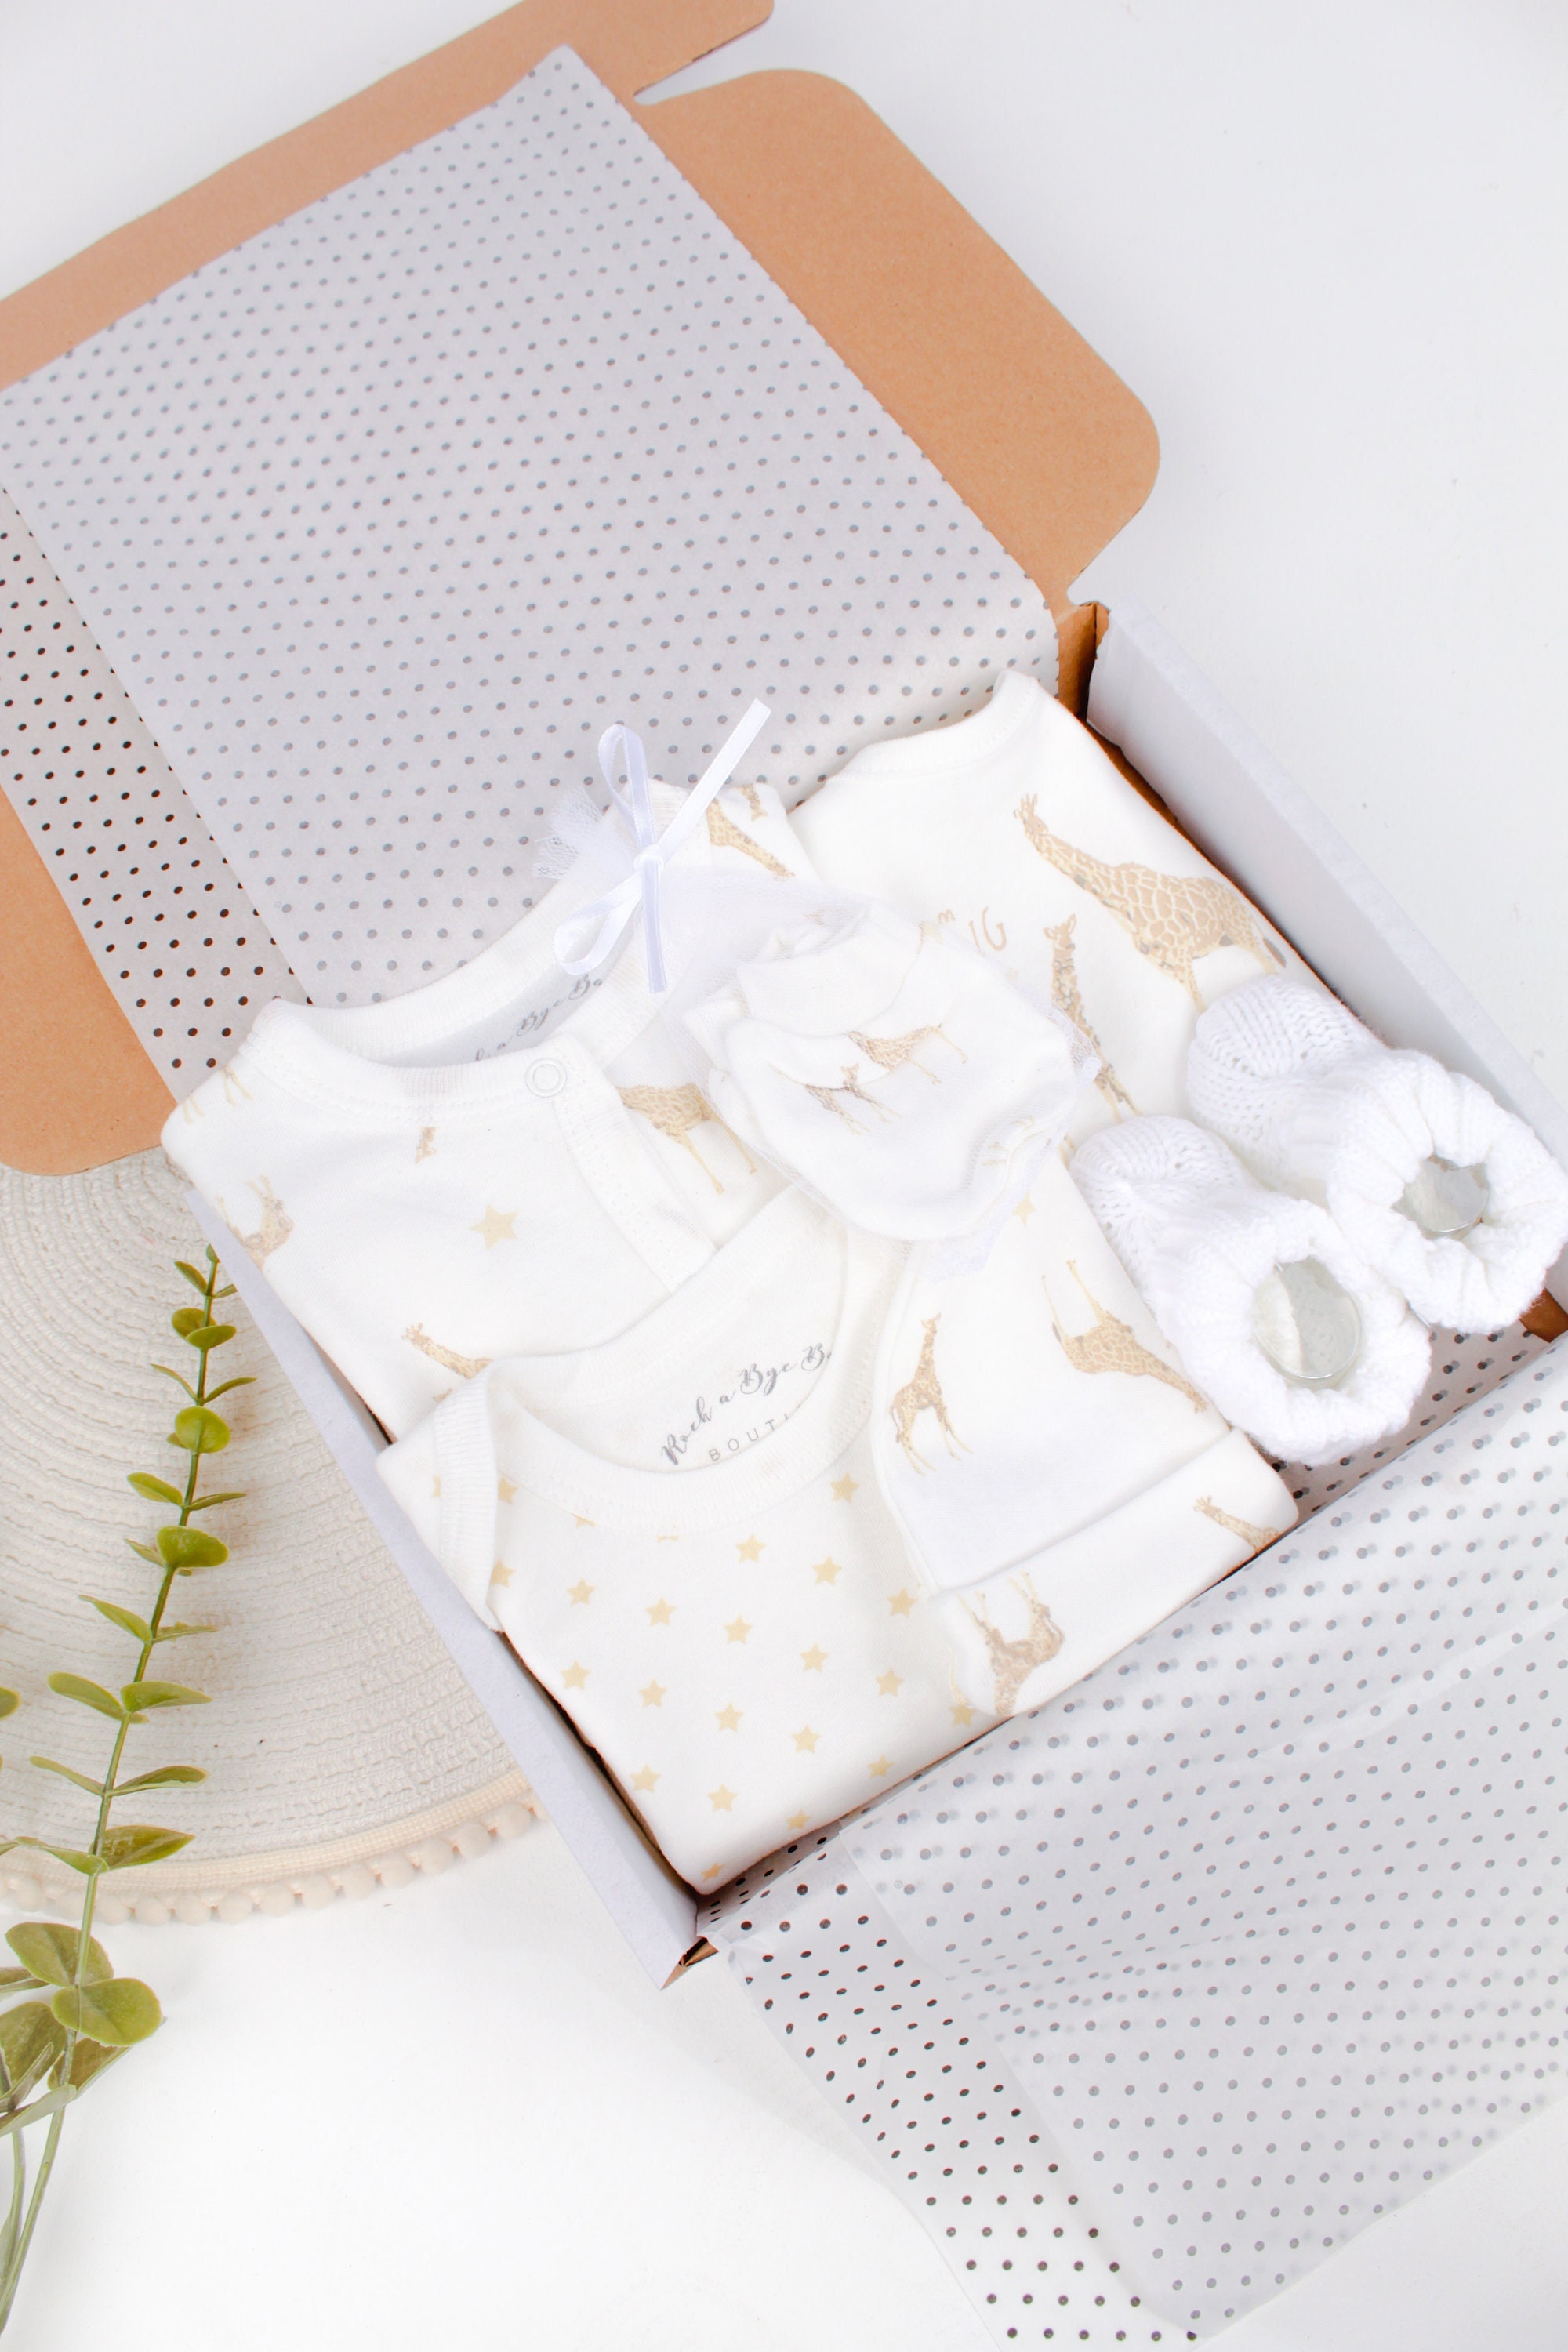 New Baby Cream Unisex Gift Wrapped Clothing Set With White